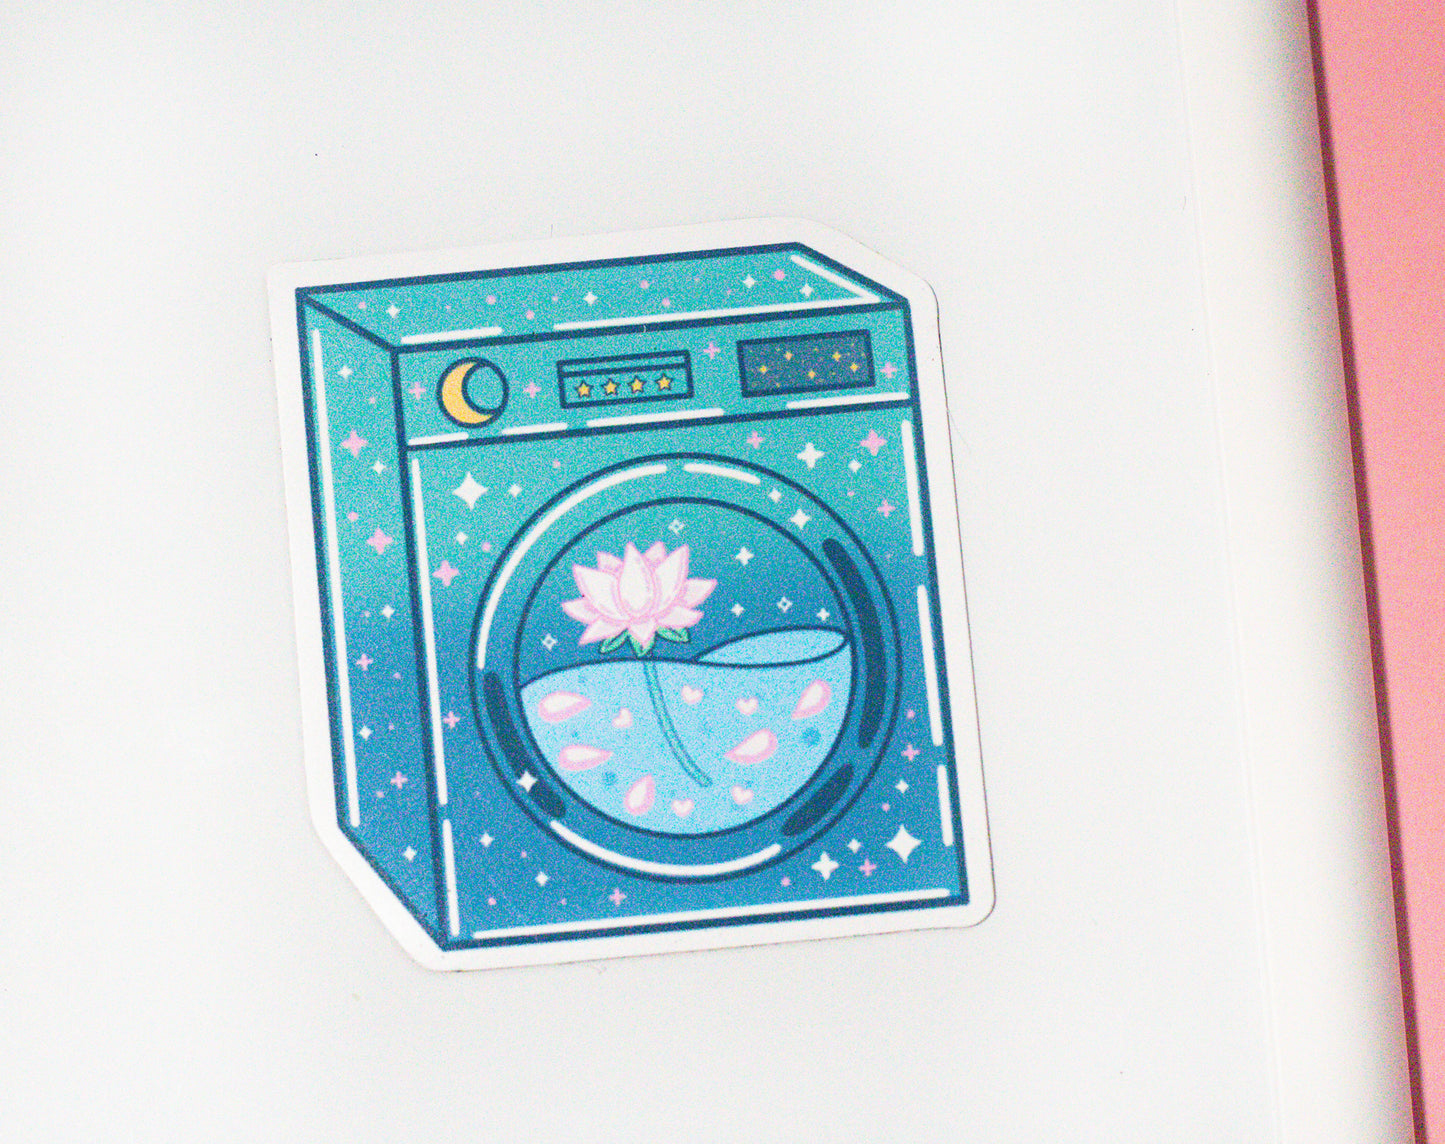 Laundry Machine Magnets